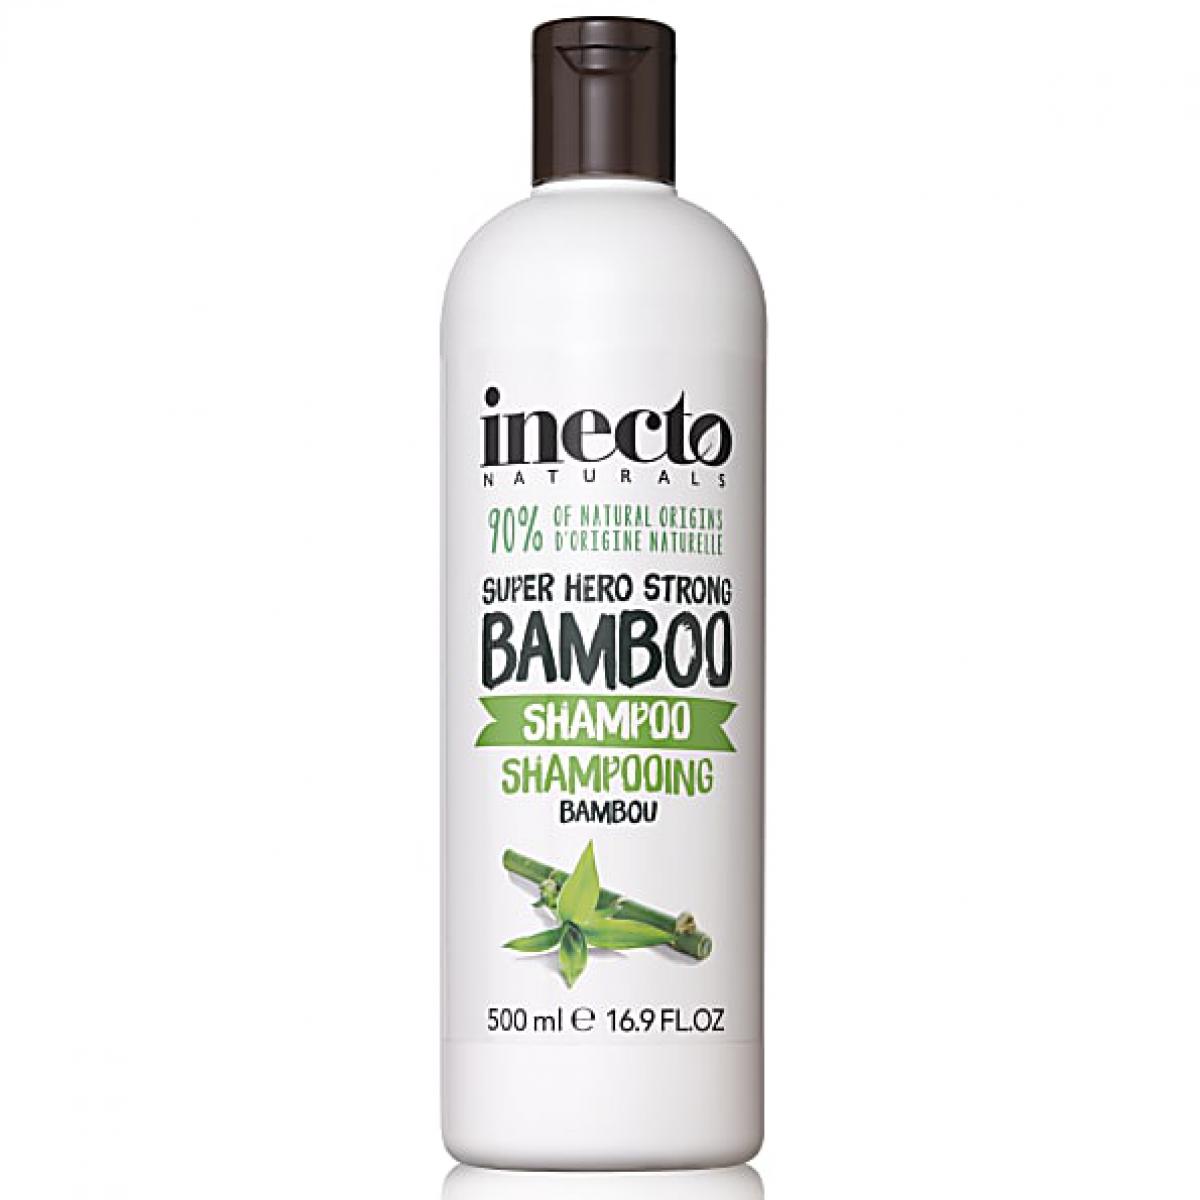 شامپو بامبو - Bamboo shampoo 